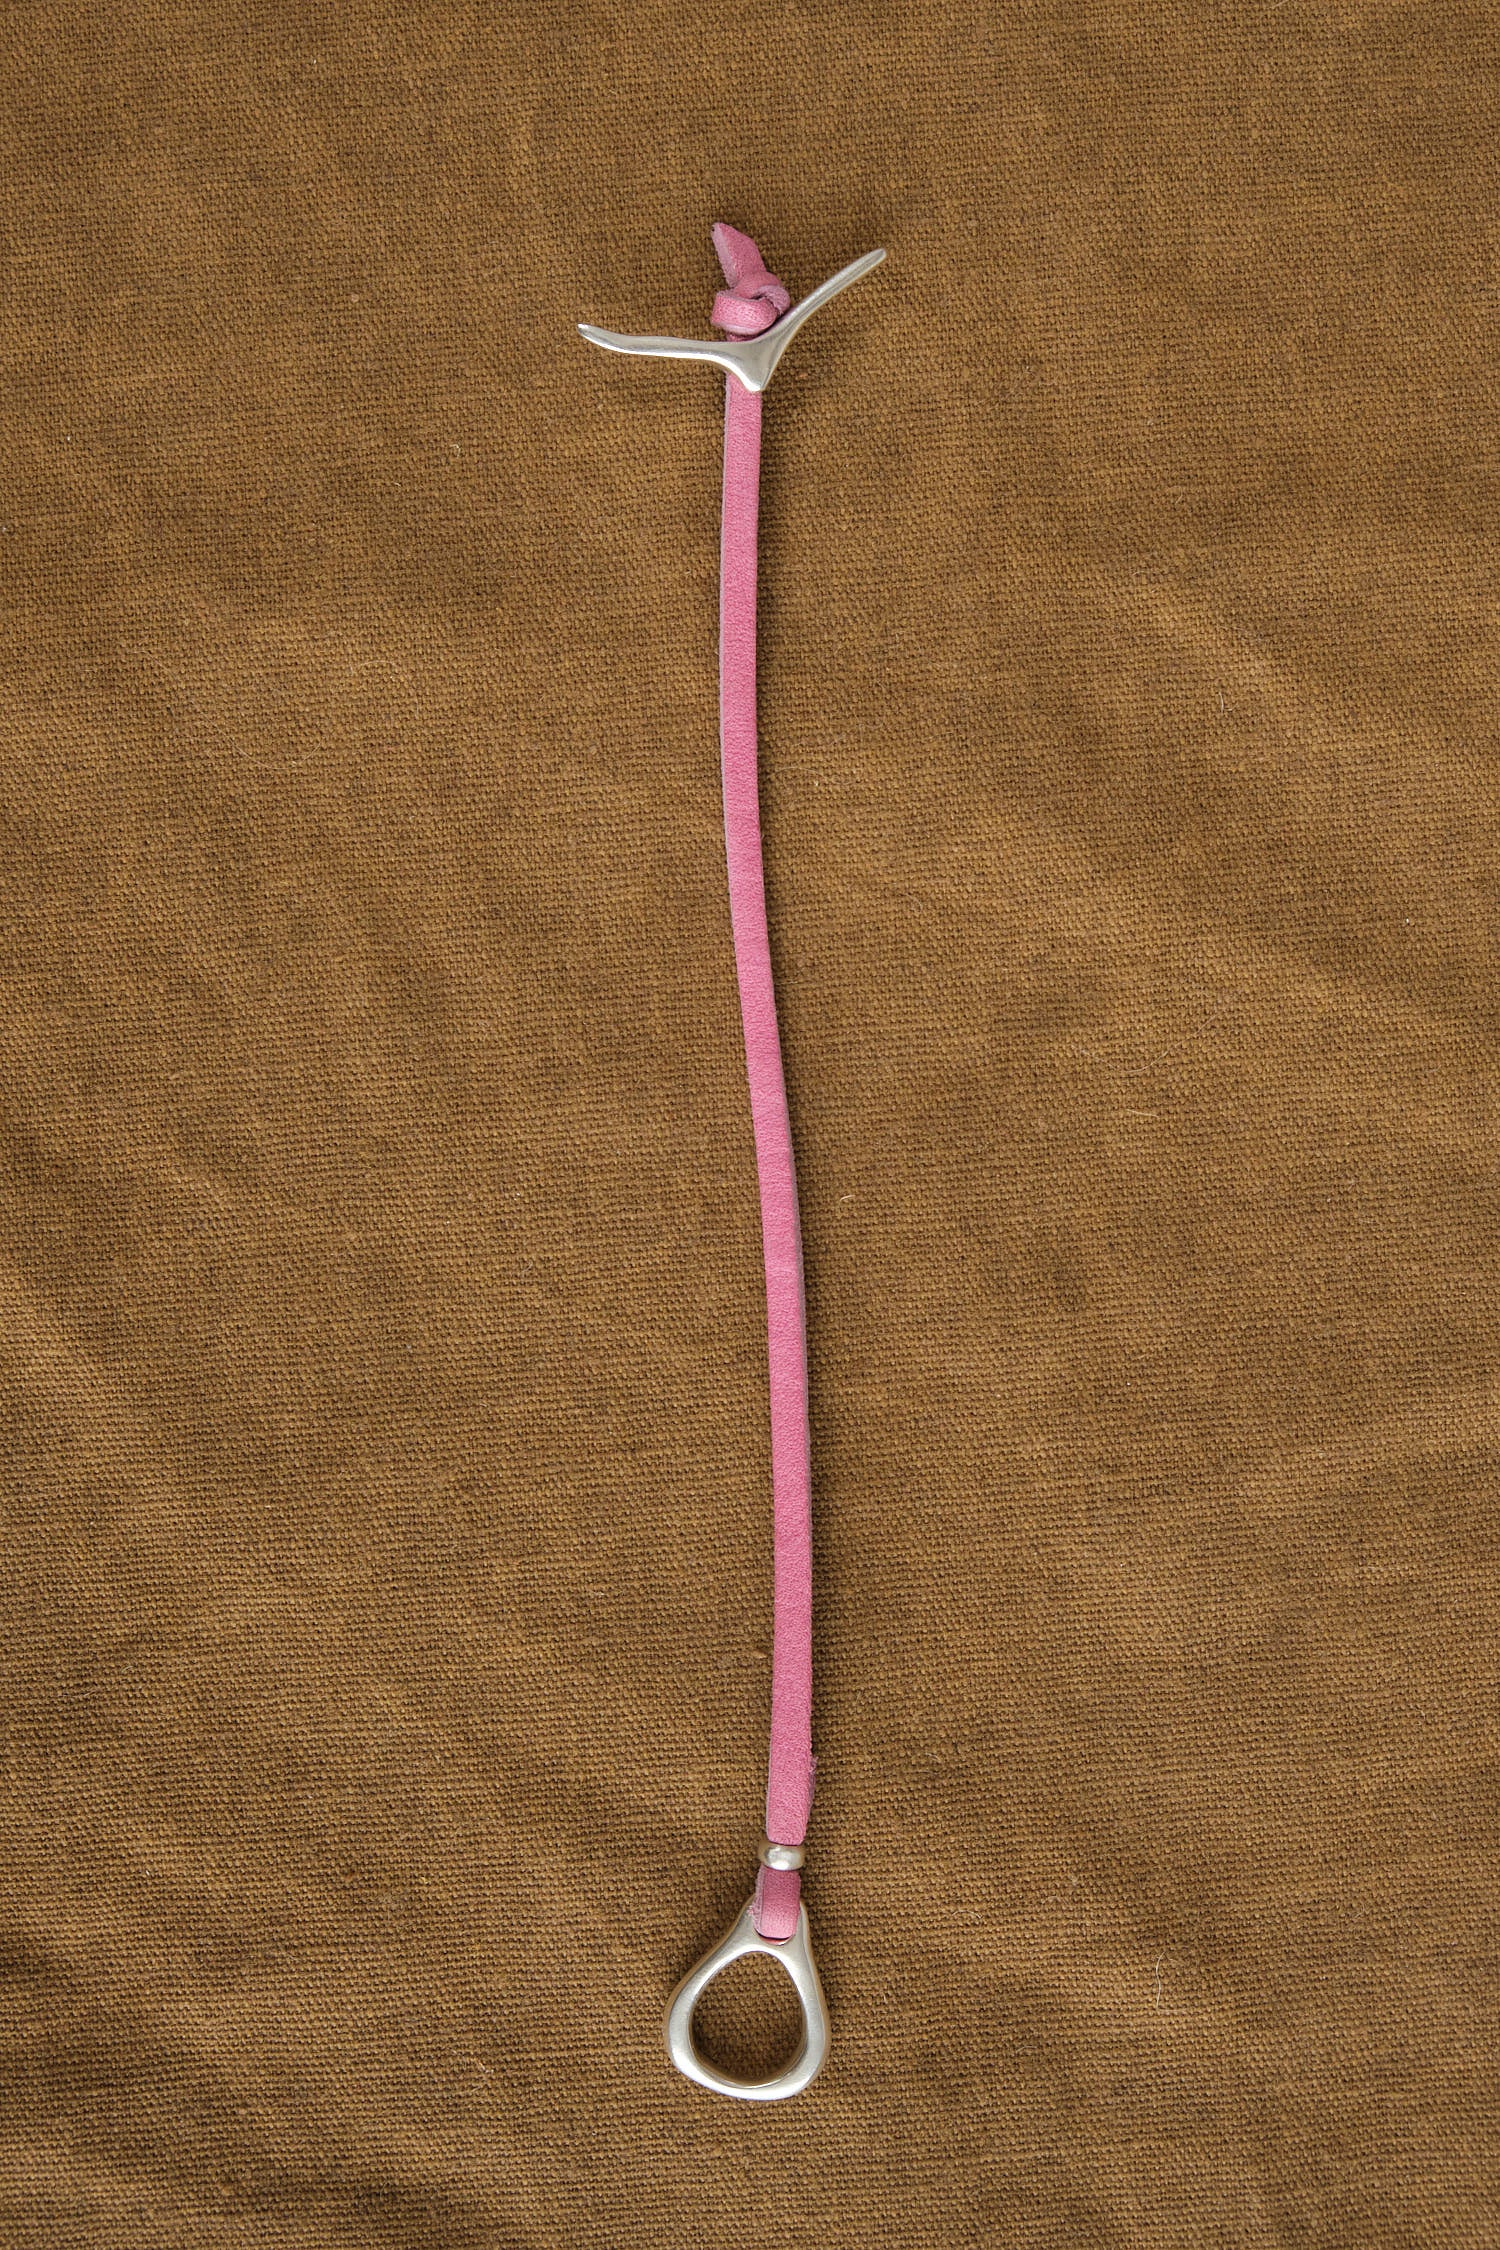 JP Clasp Rawhide Bracelet in Pink long